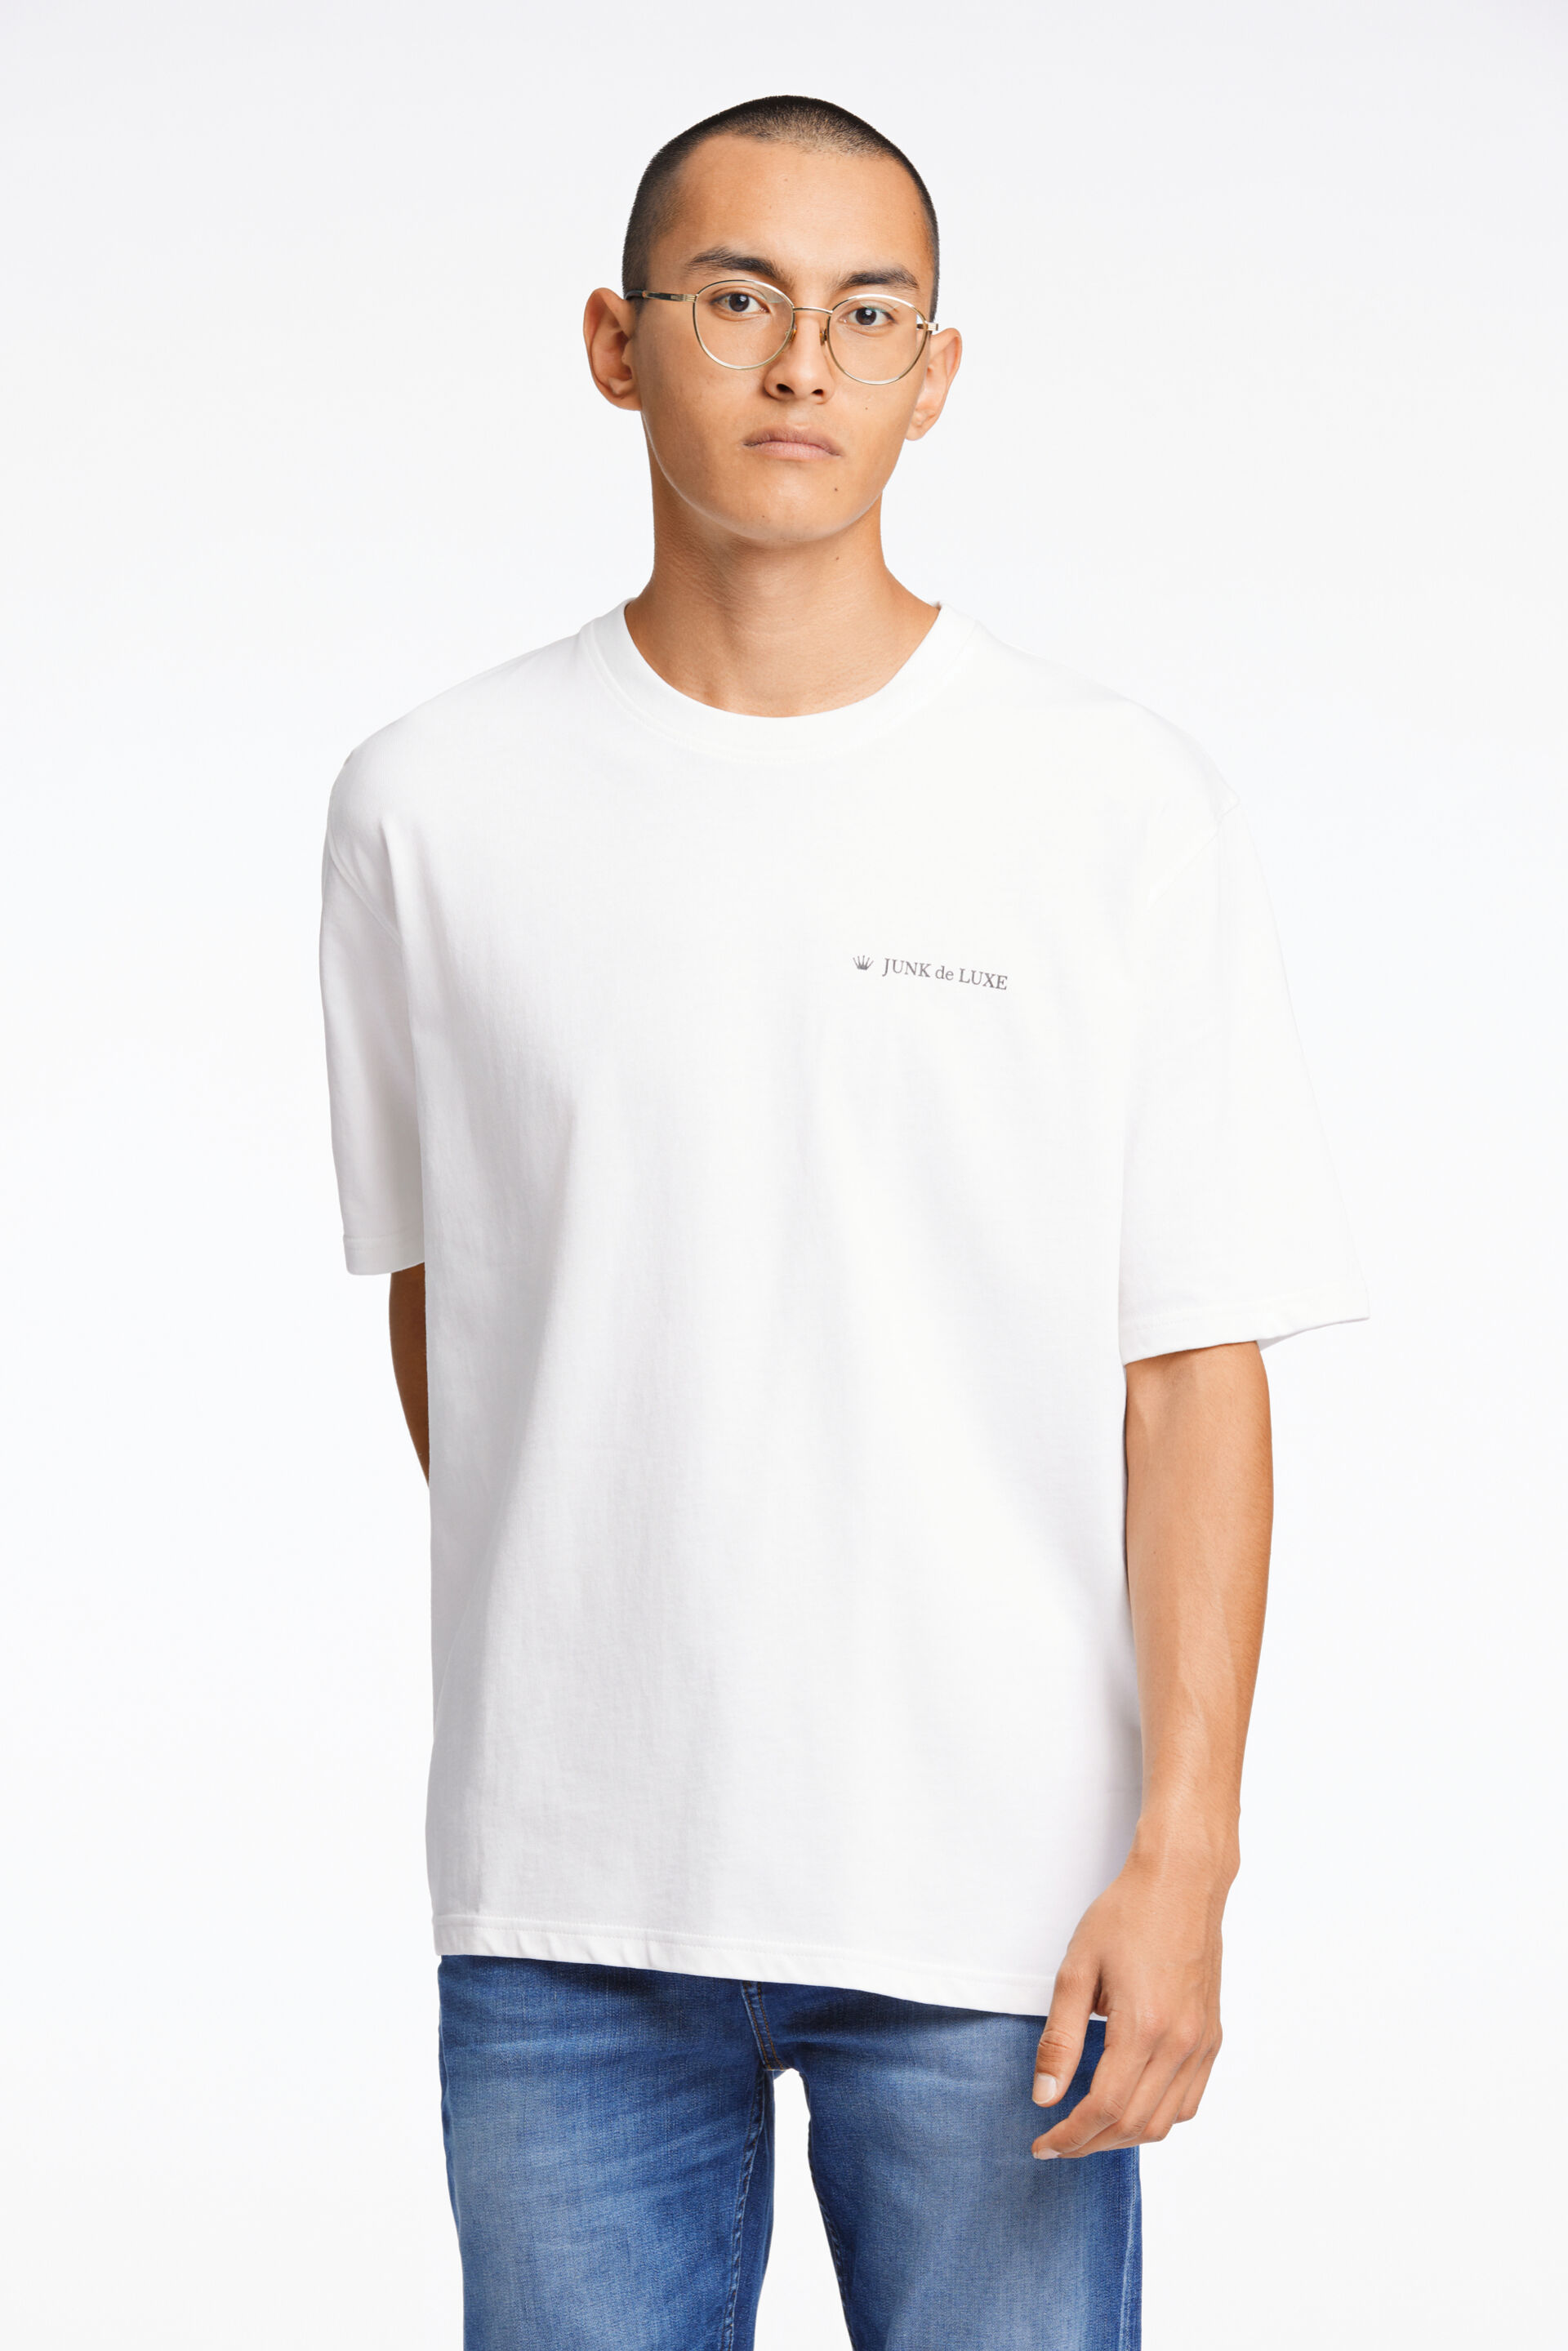 Junk de Luxe  T-shirt Hvid 60-455019